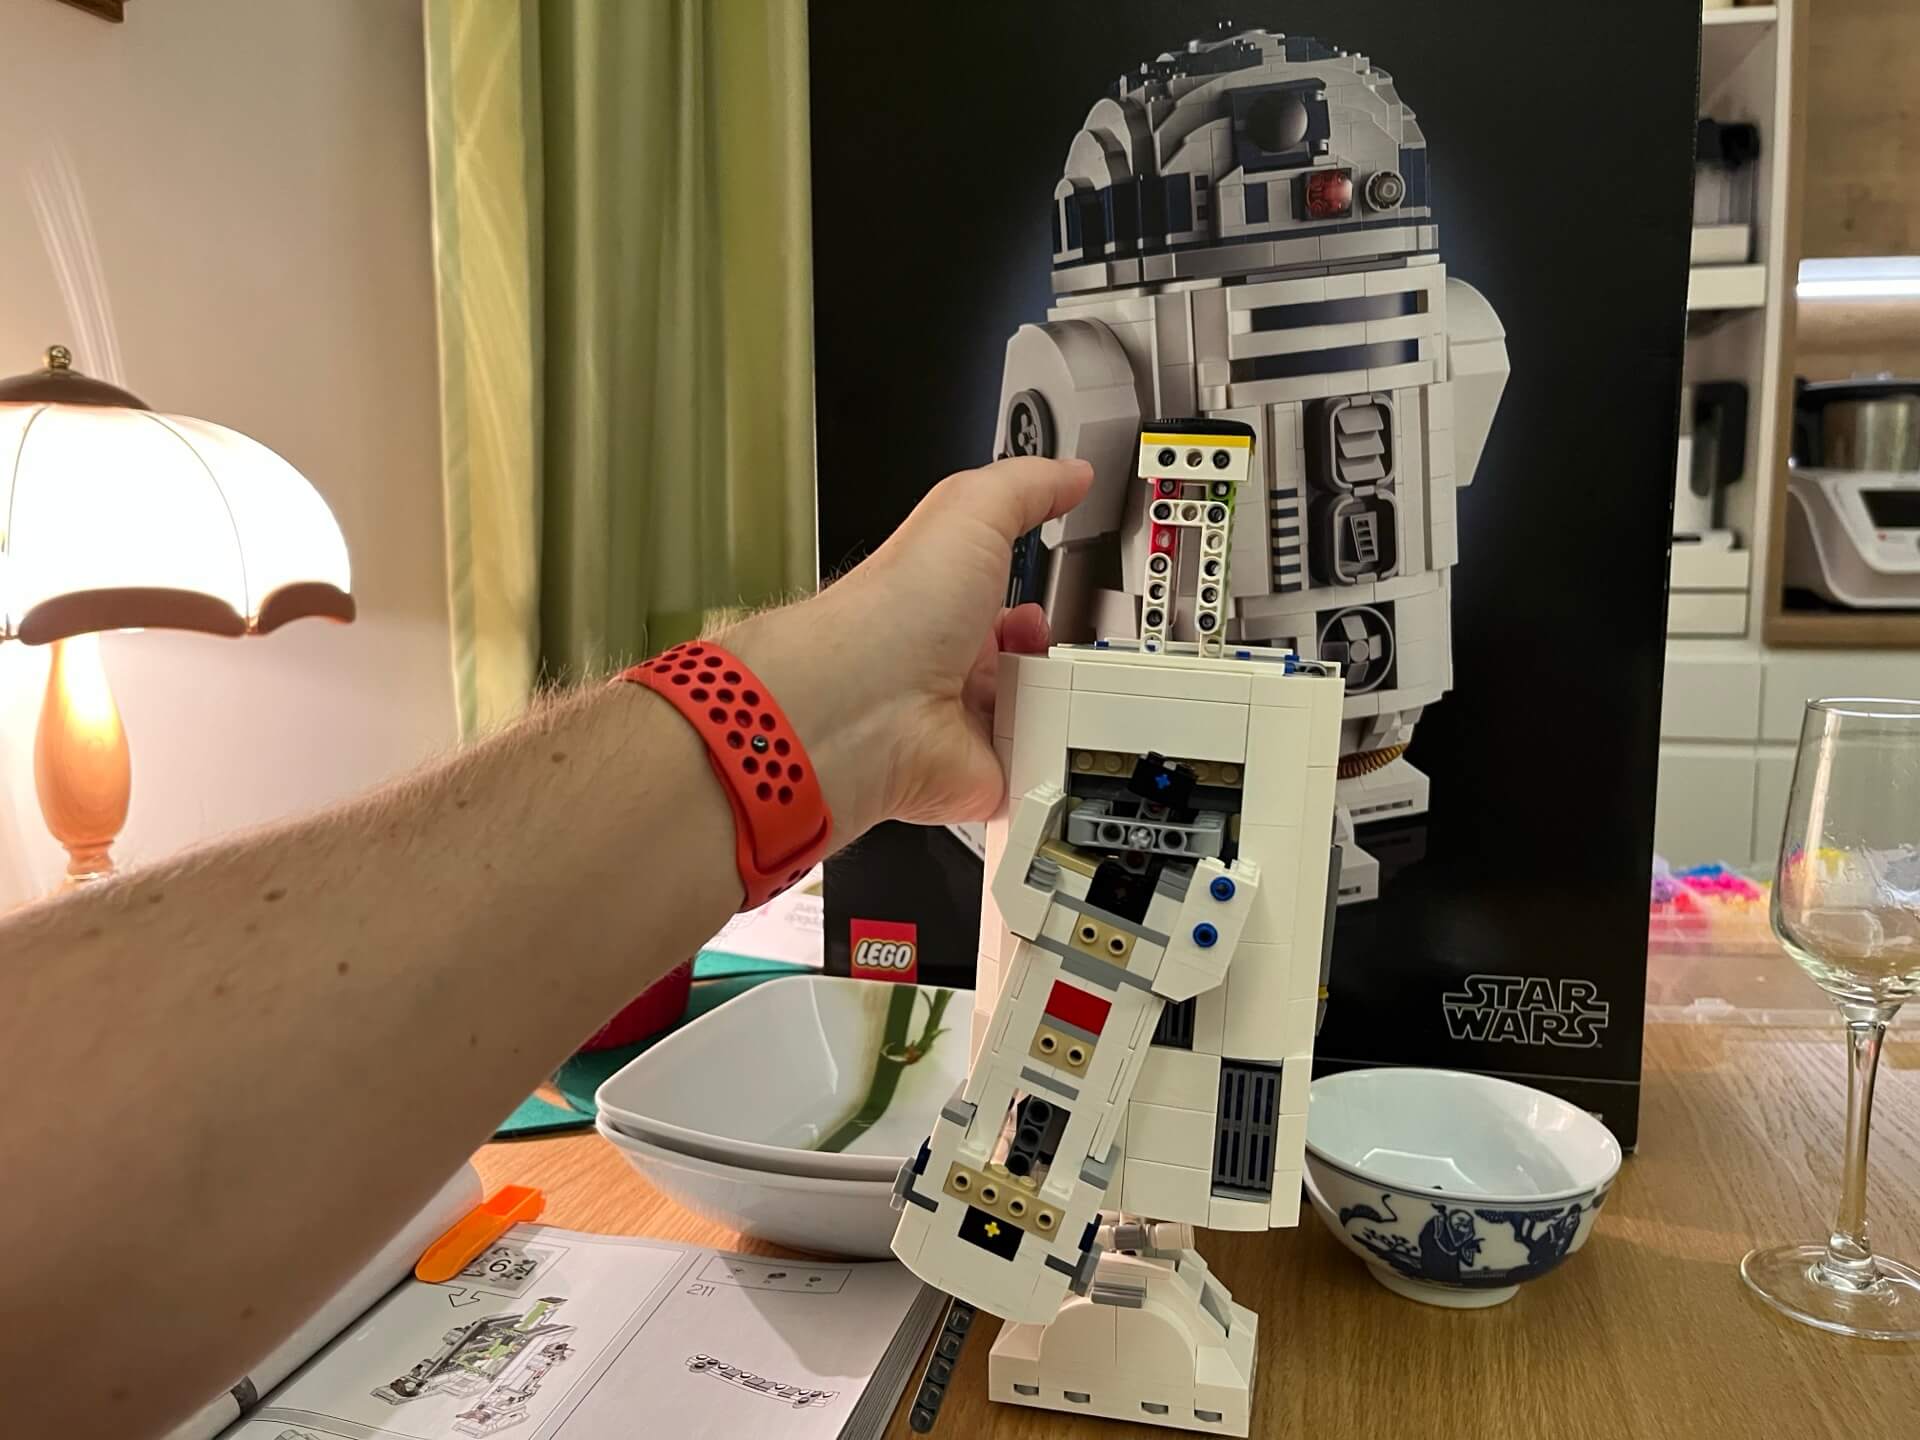 Building R2D2 Star Wars Lego robot which I got last Christmas legs